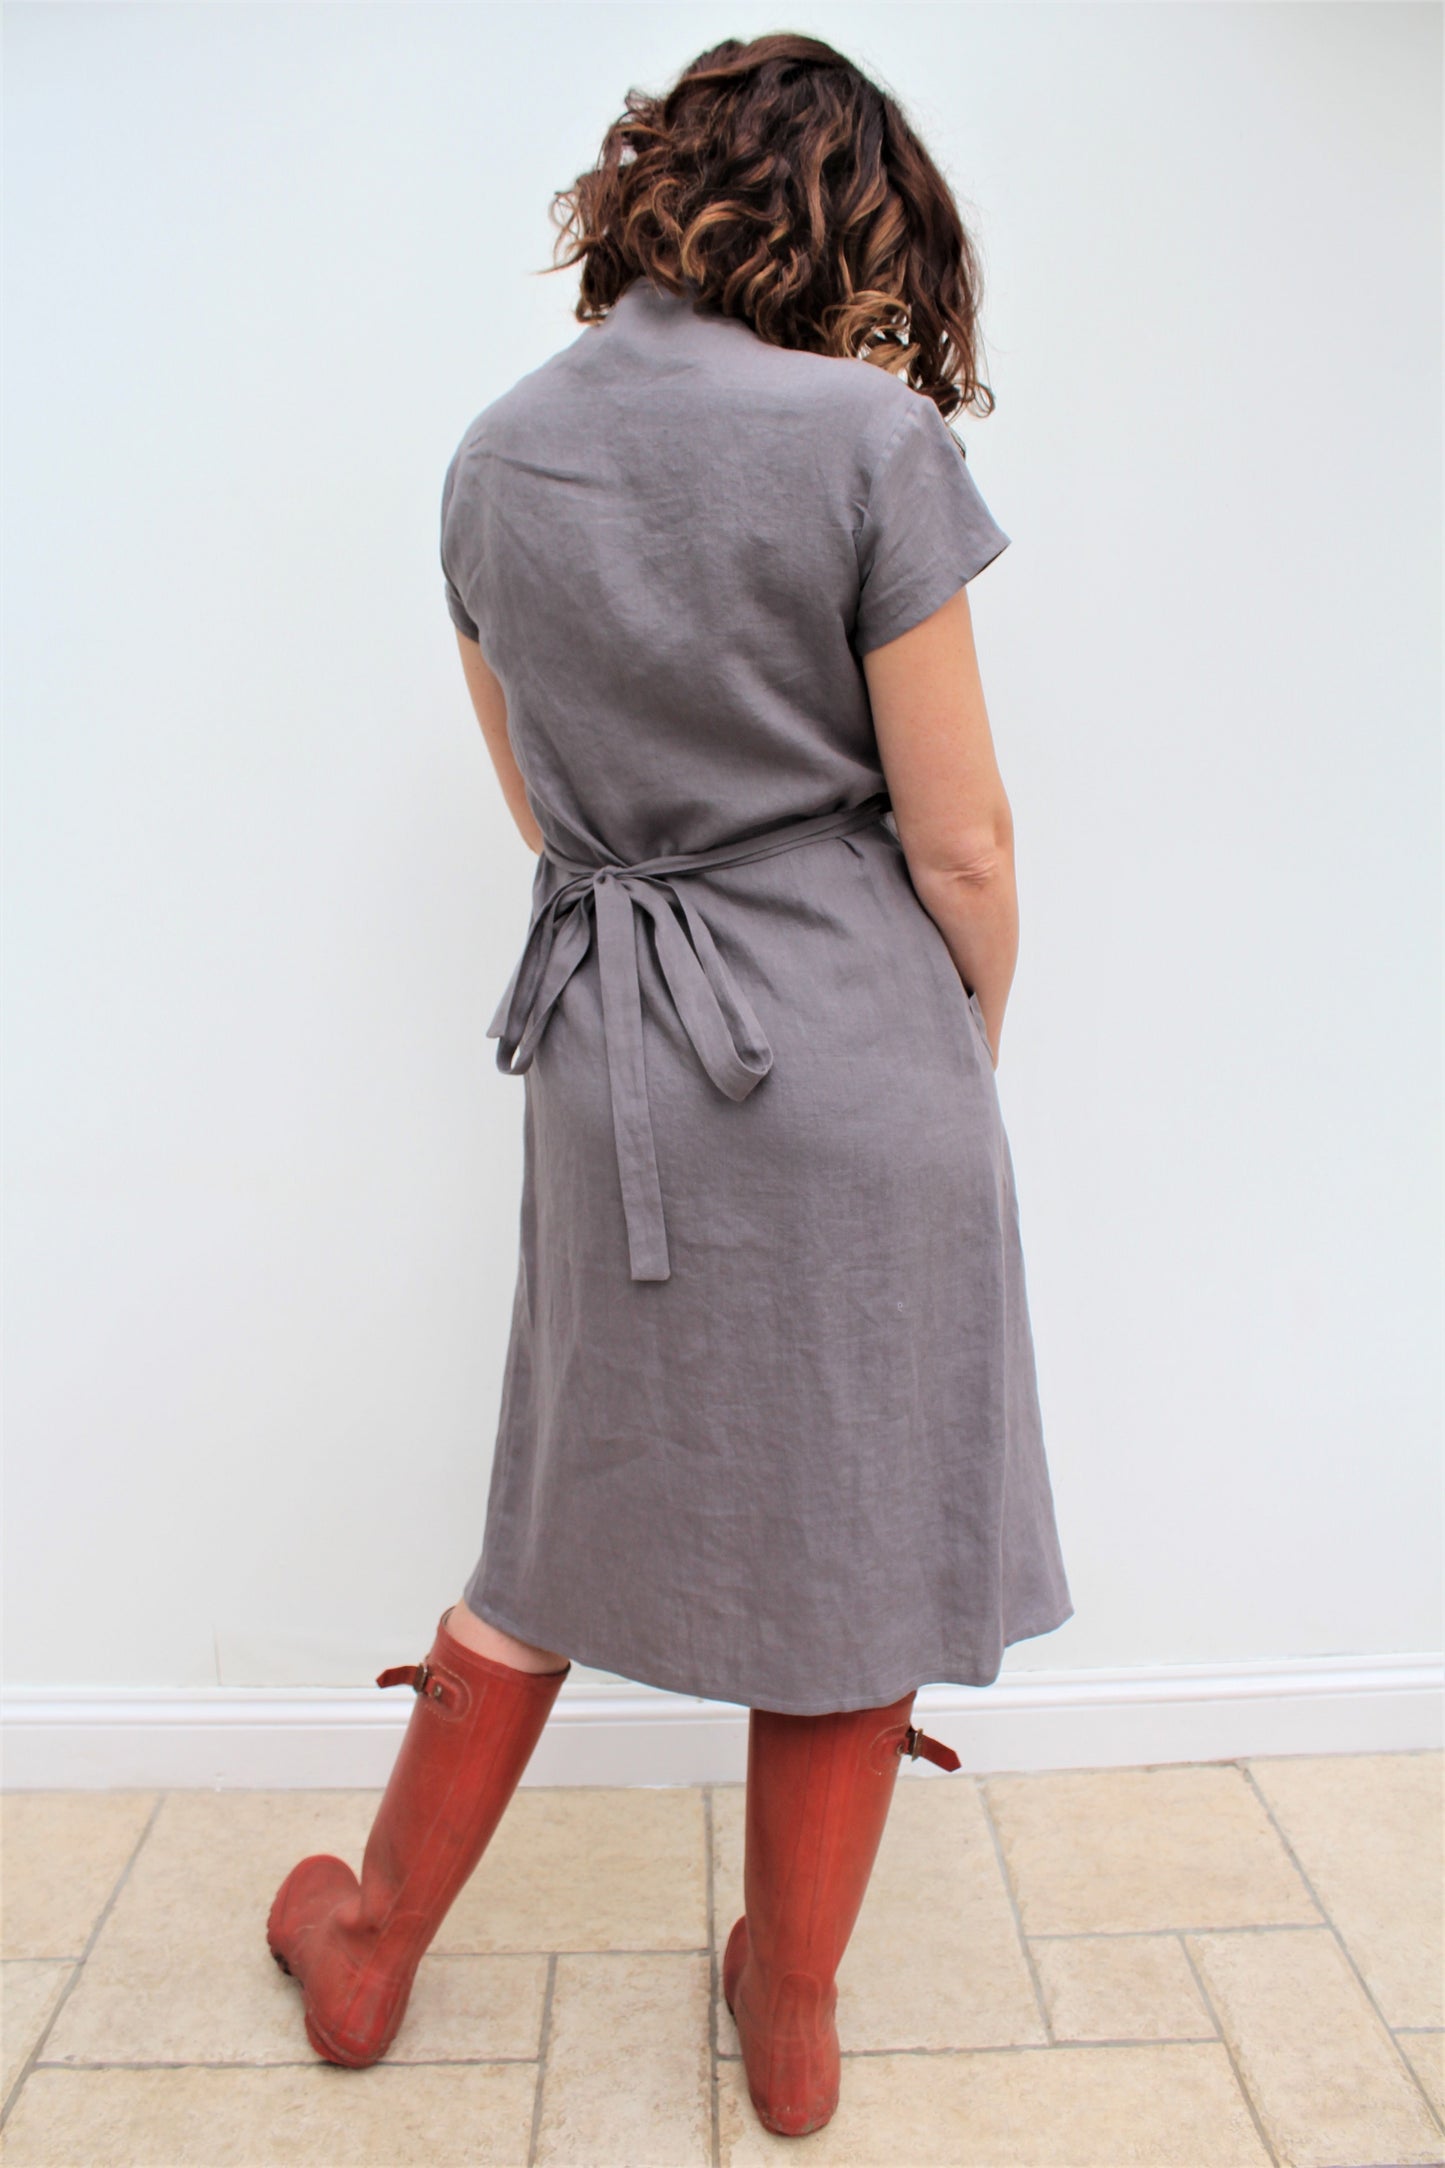 Celeste - linen wrap dress